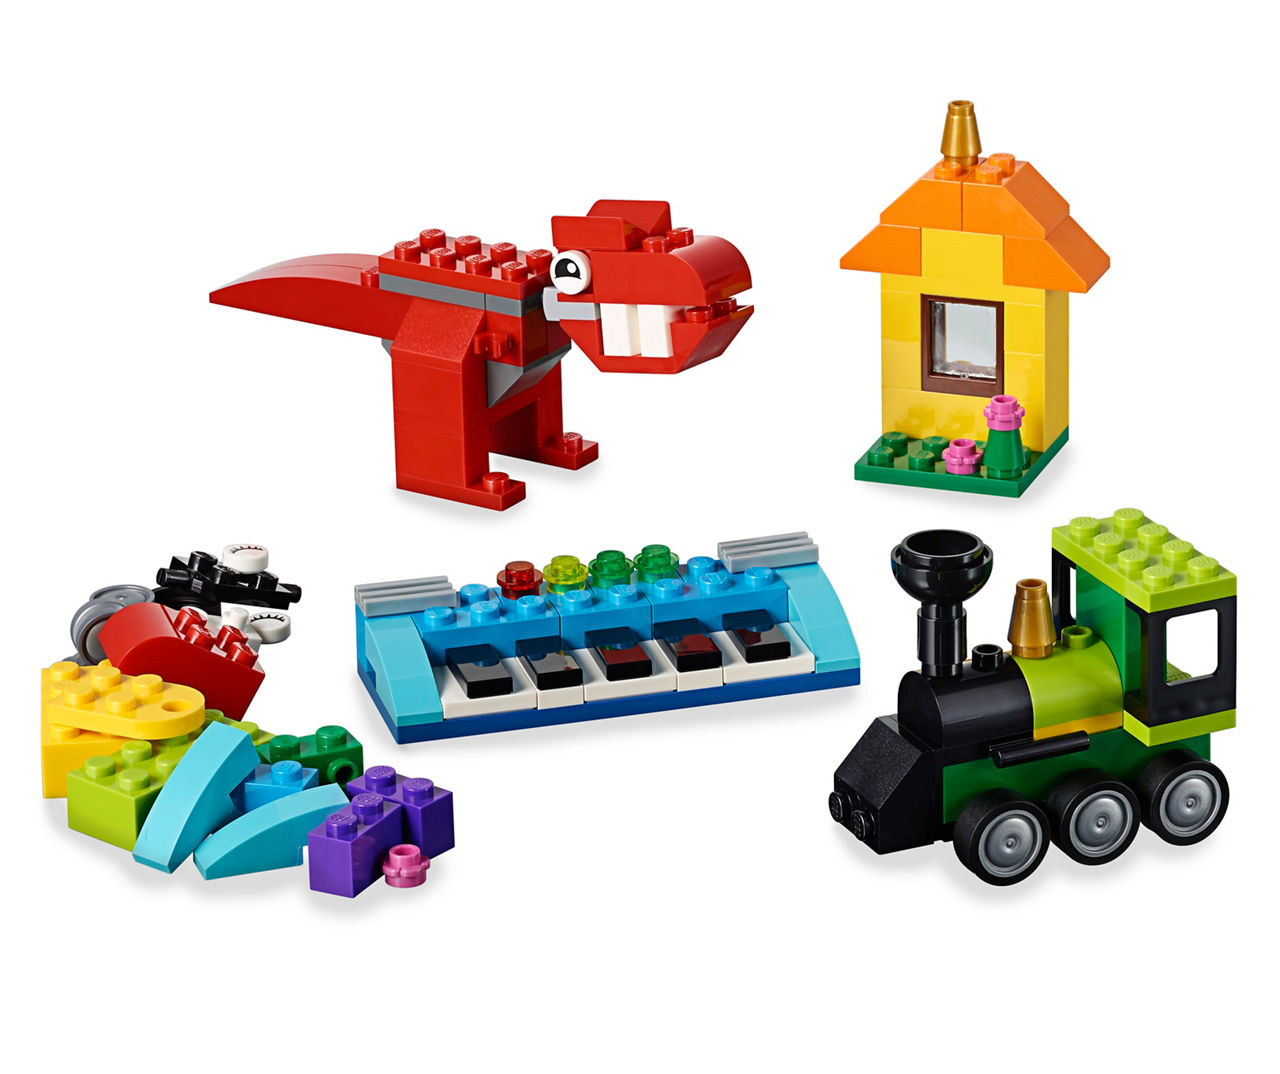 Udstyr krig kradse LEGO Classic Bricks & Ideas 11001 123-Piece Building Set | Big Lots